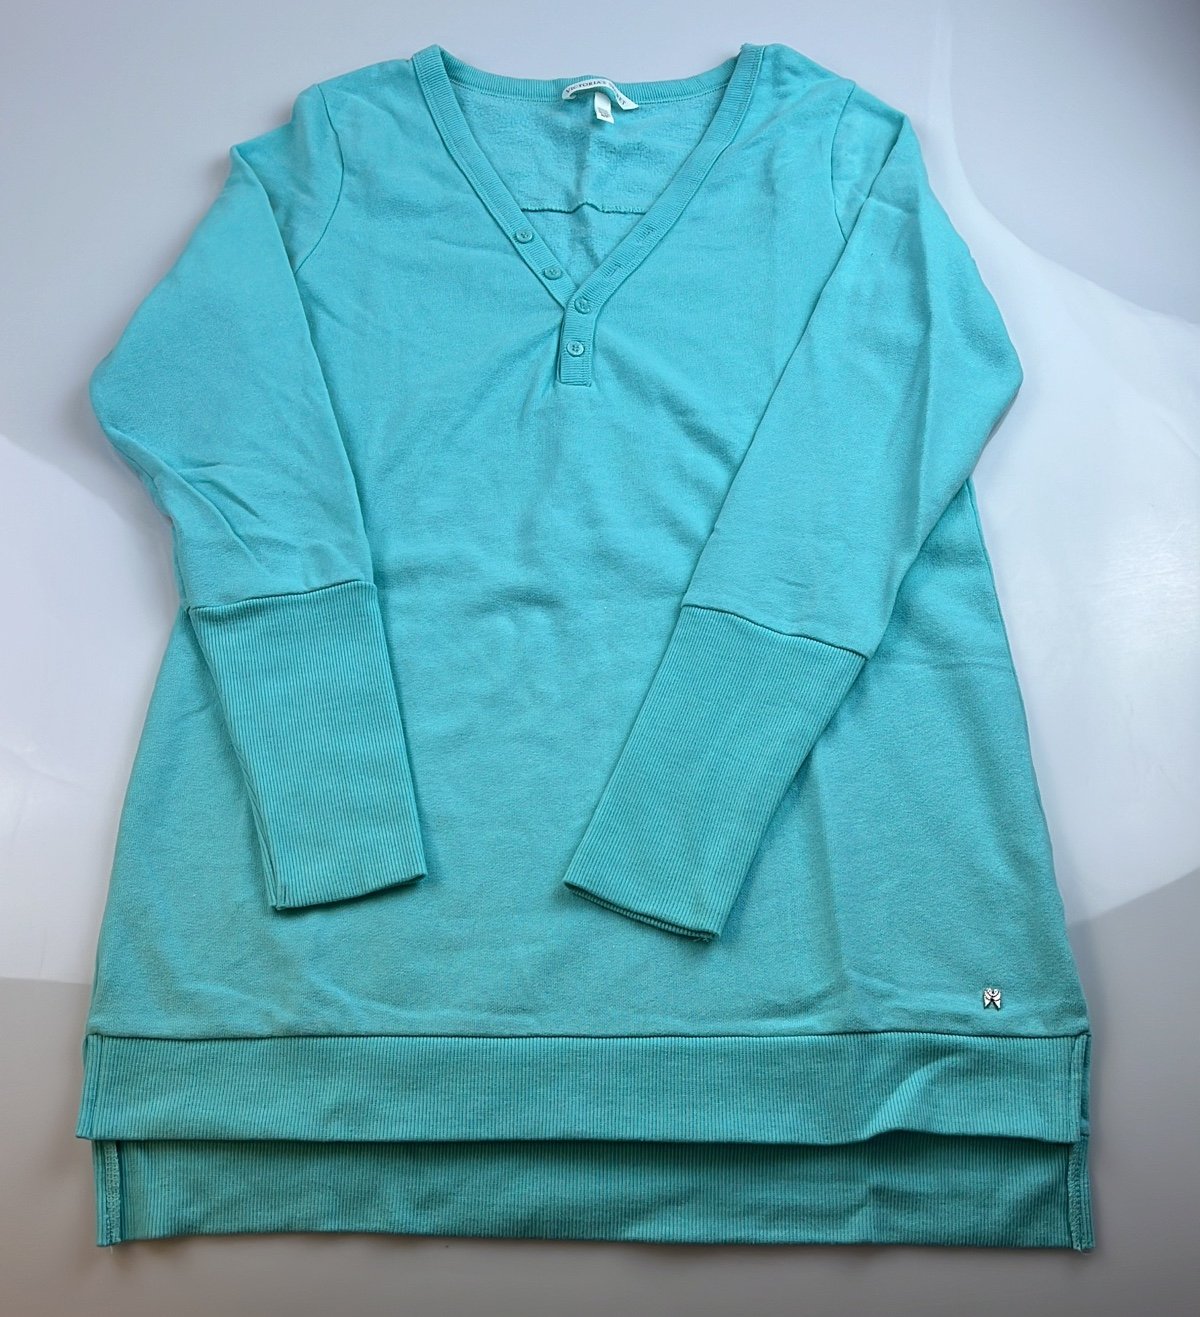 Buy Victoria’s Secret Blue Sleepshirt S2-44 hXDquJbN5 F